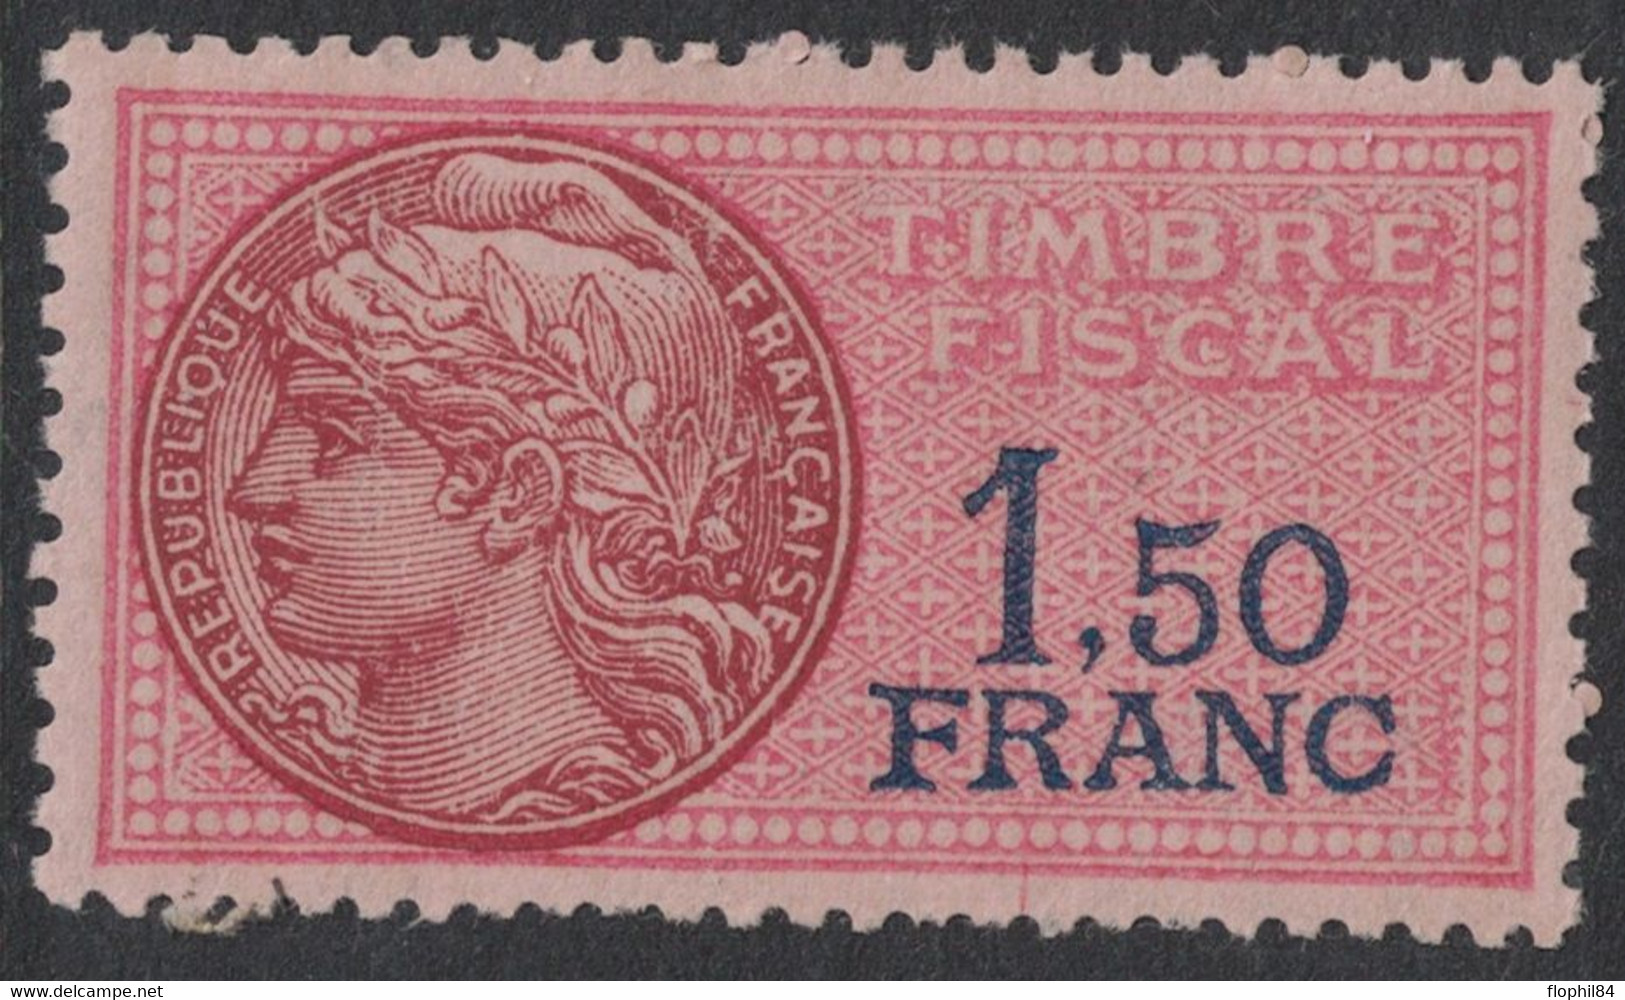 TIMBRE MOBILE - FISCAUX GENERAUX - N°124 - NEUF AVEC GOMME SANS TRACE - COTE 3€. - Stamps